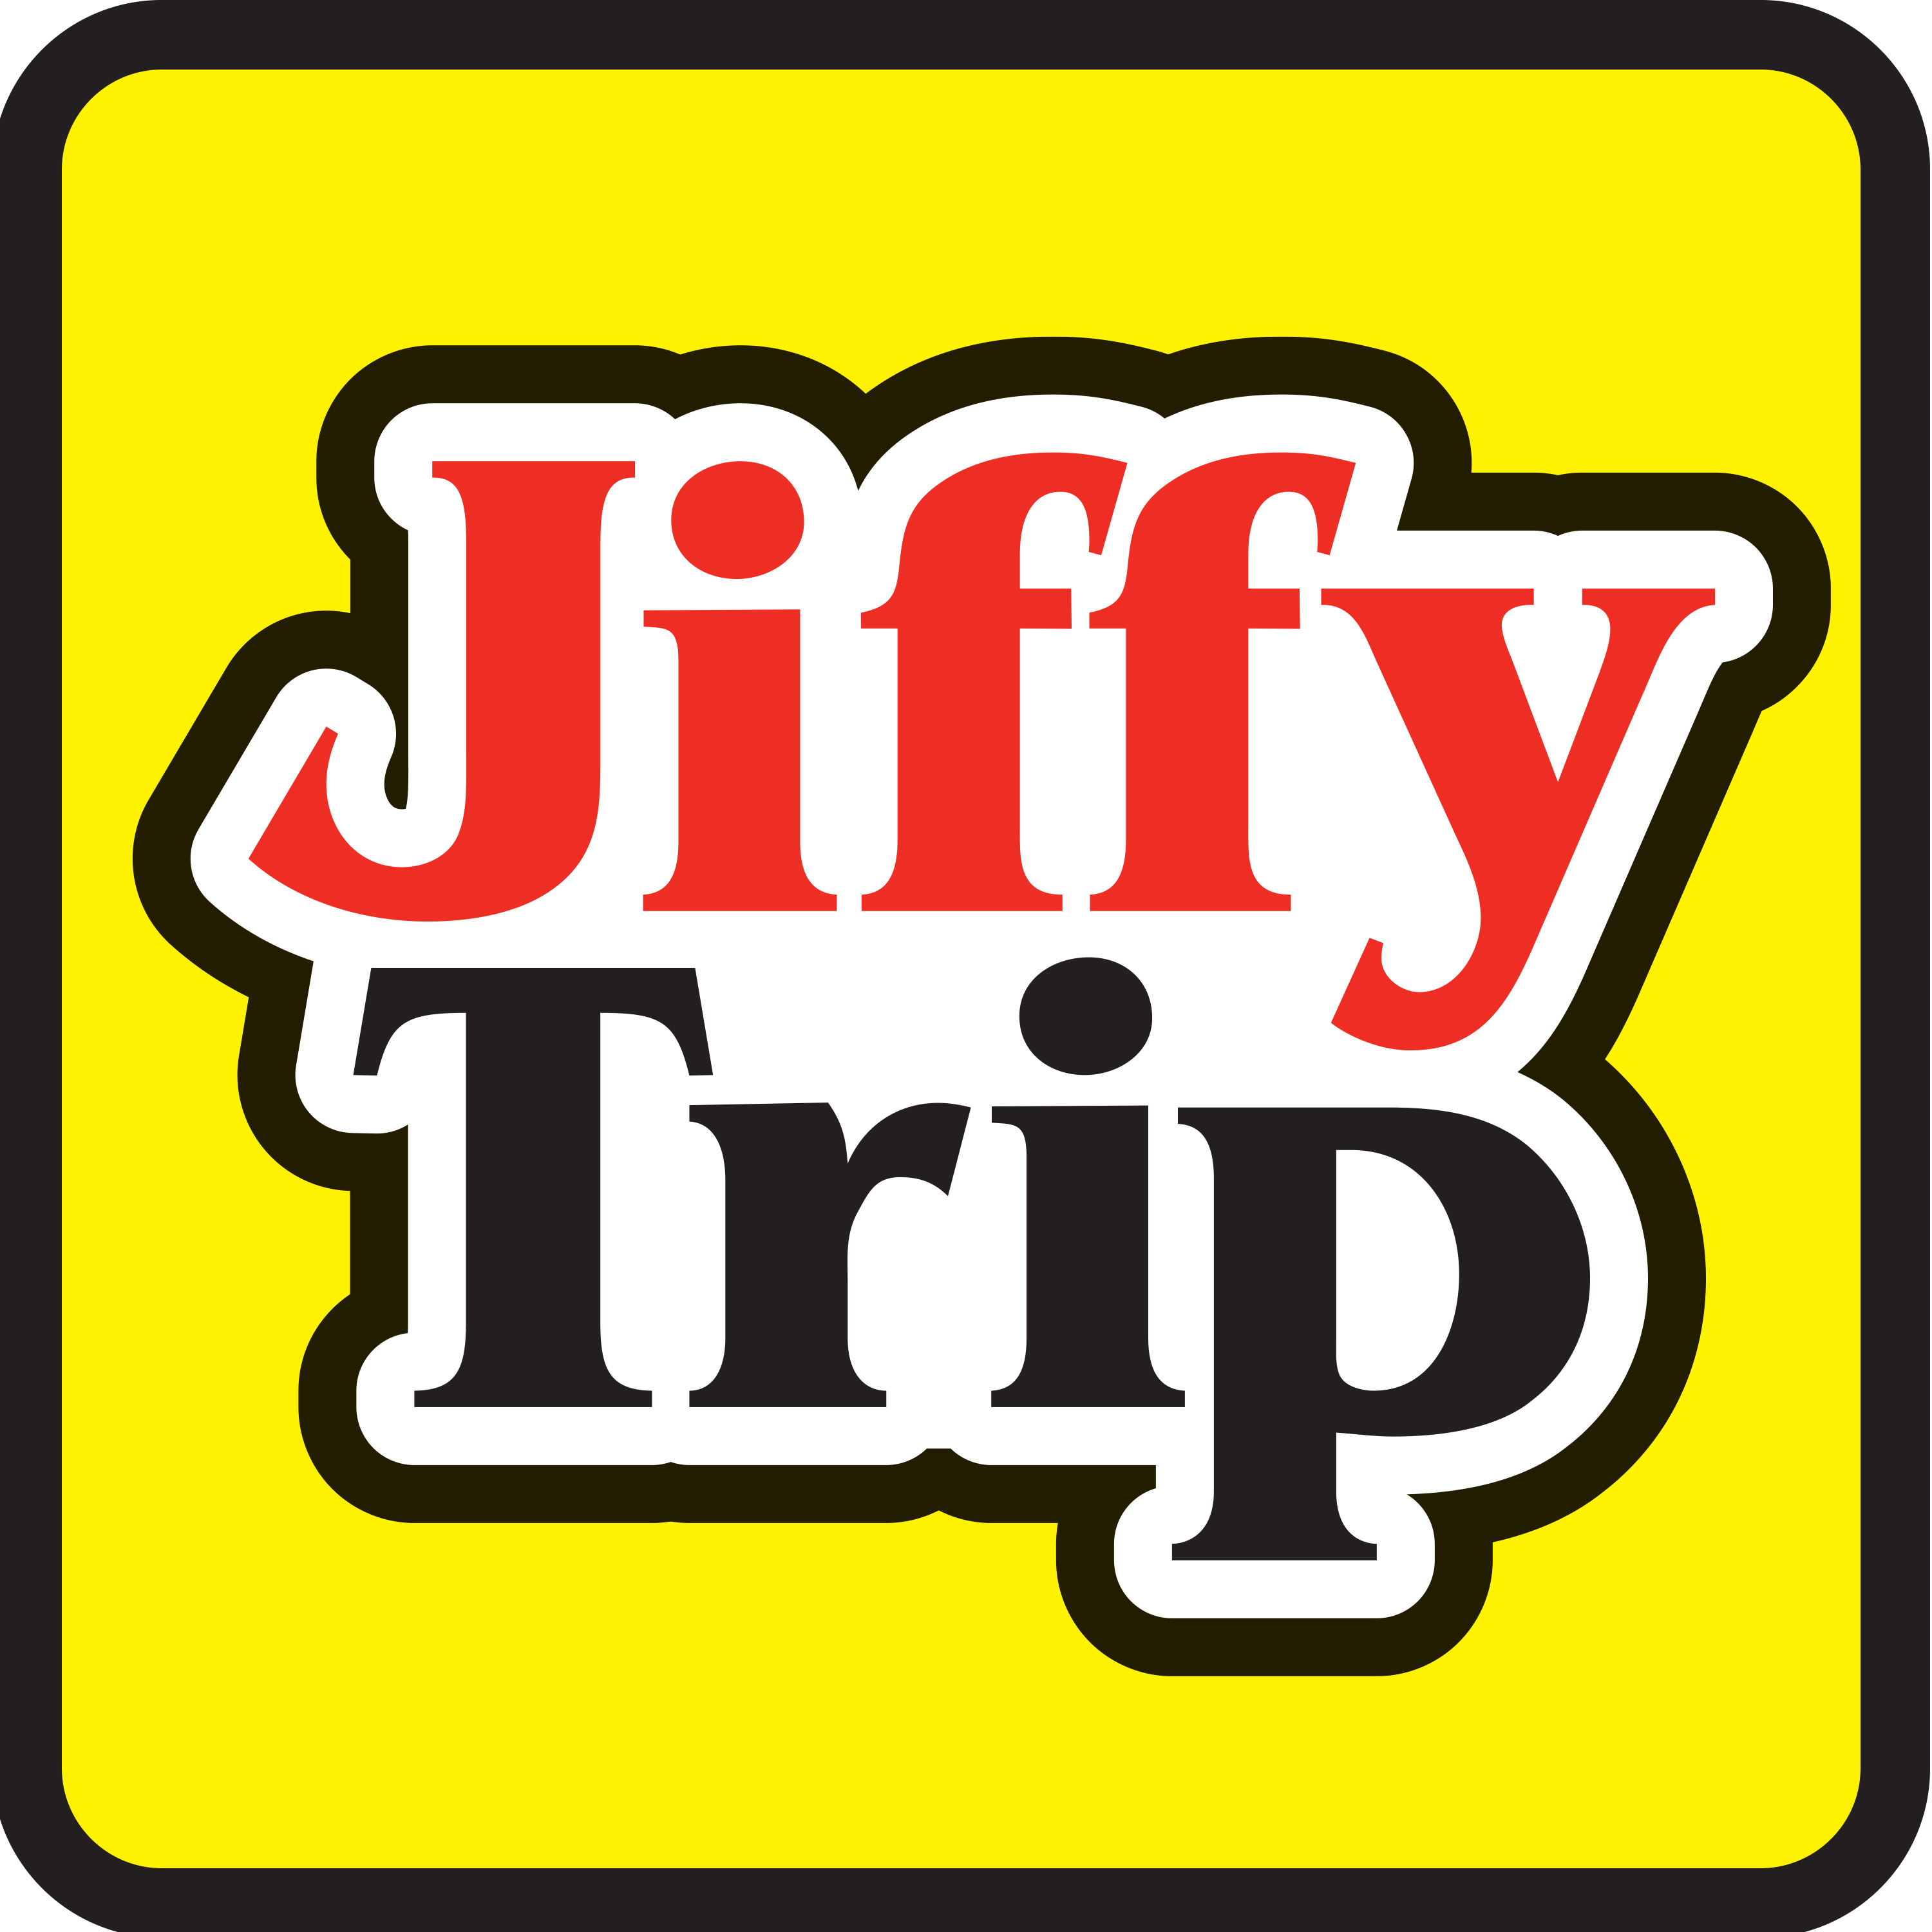 Jiffy Trip